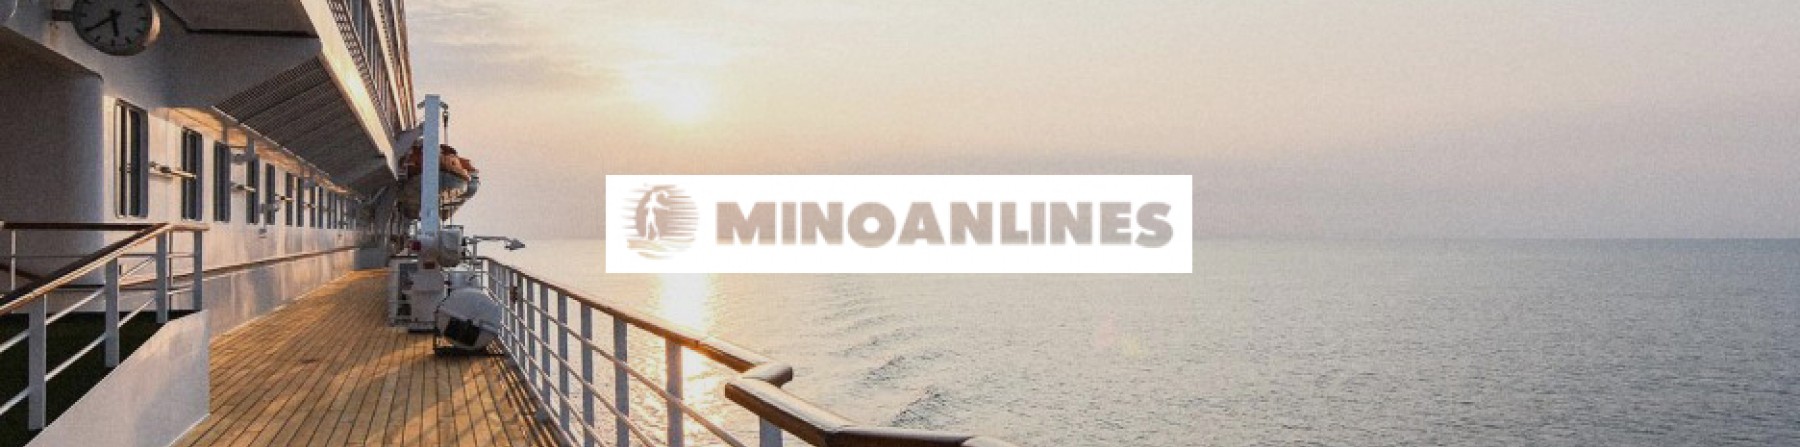 Minoan Lines teaser